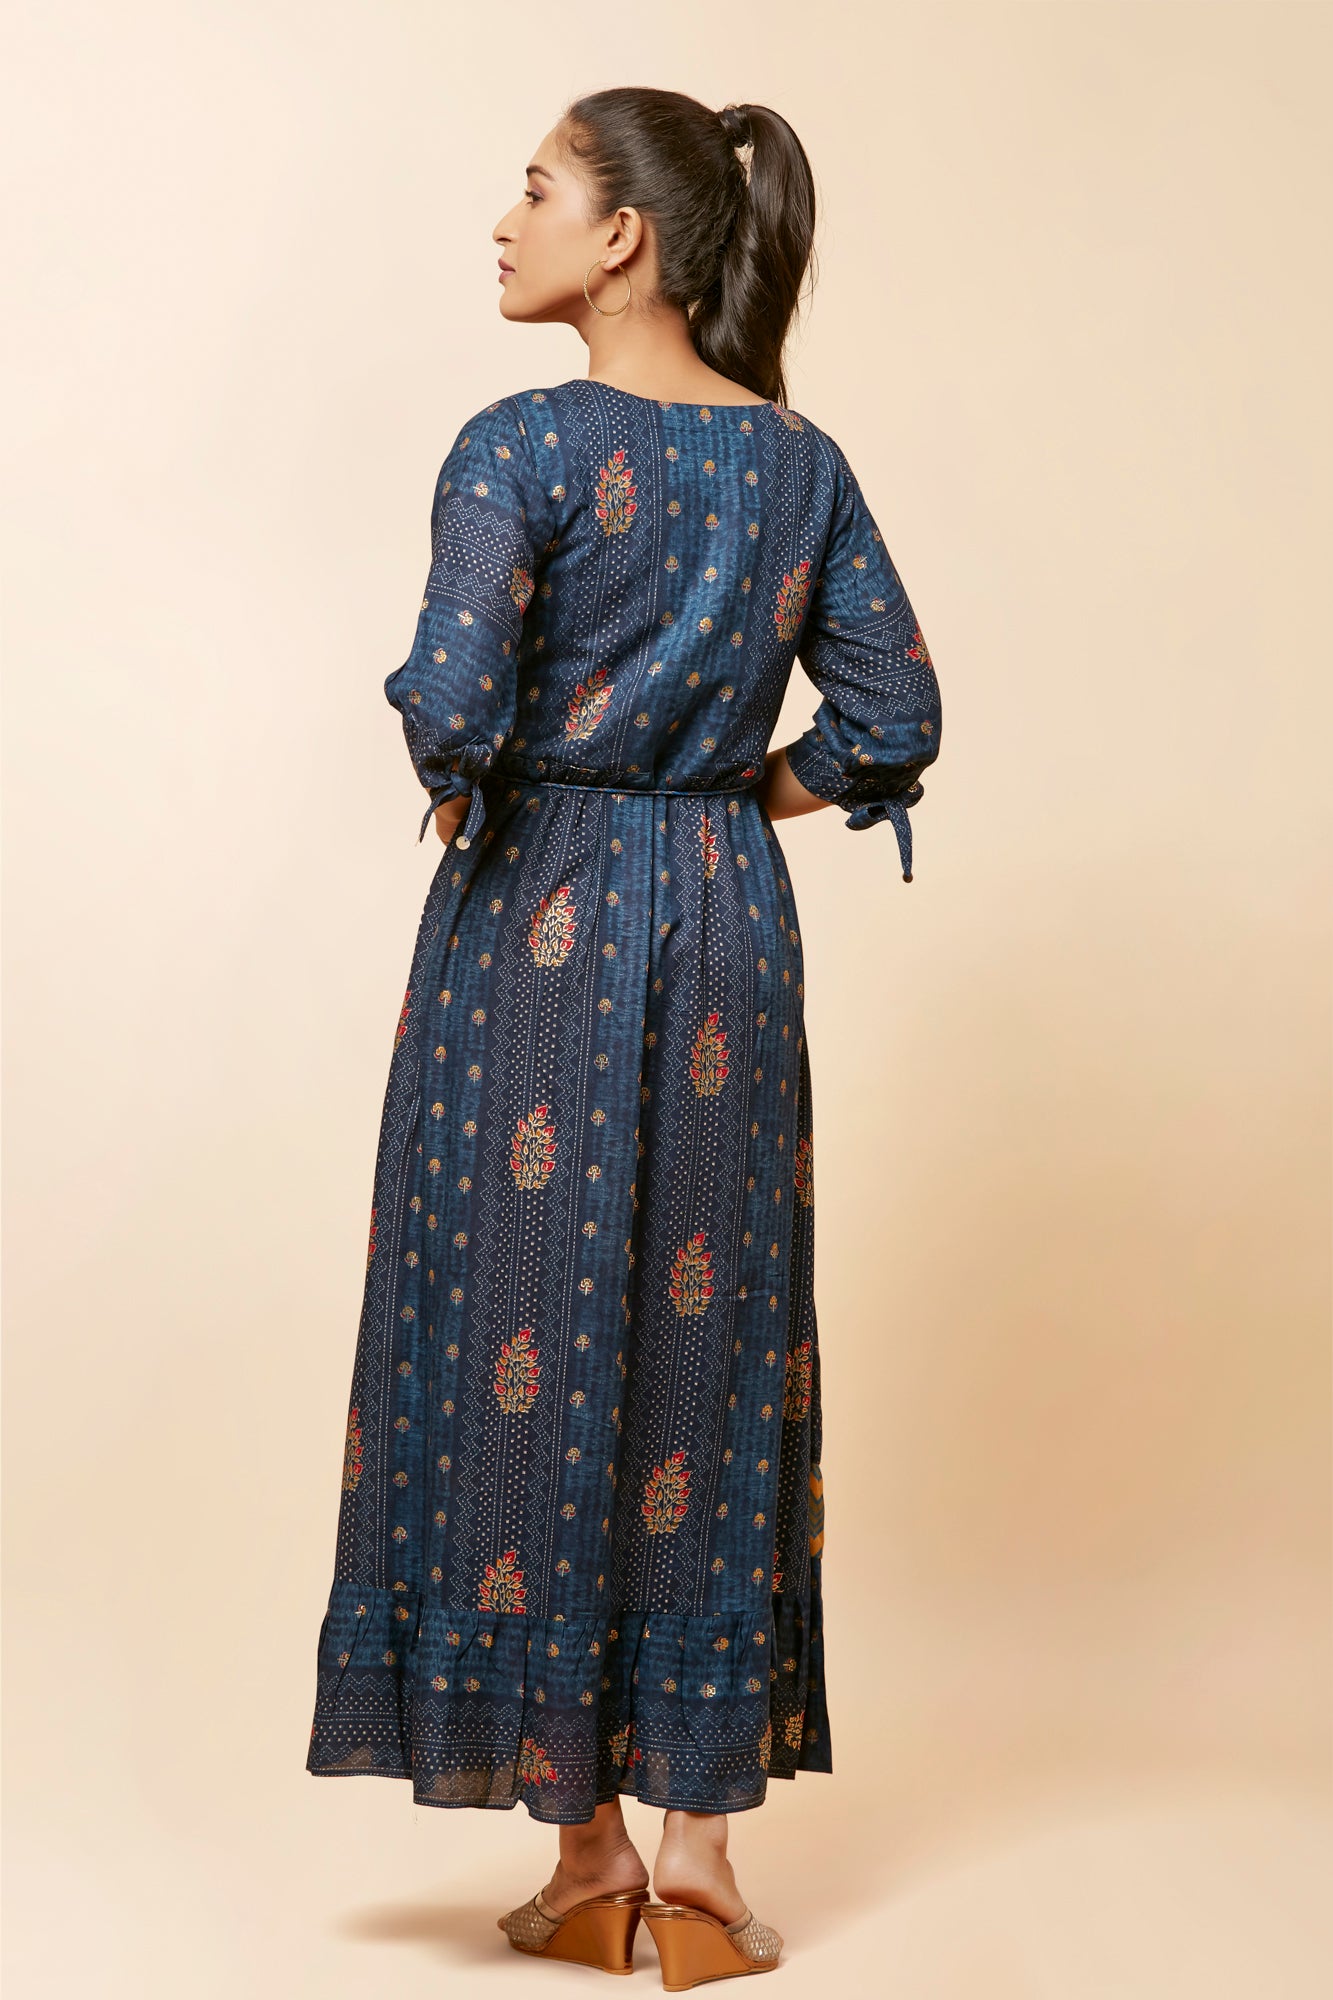 Urban Mystic Blue Colored Light Embroidered Flared Dress Style Kurta